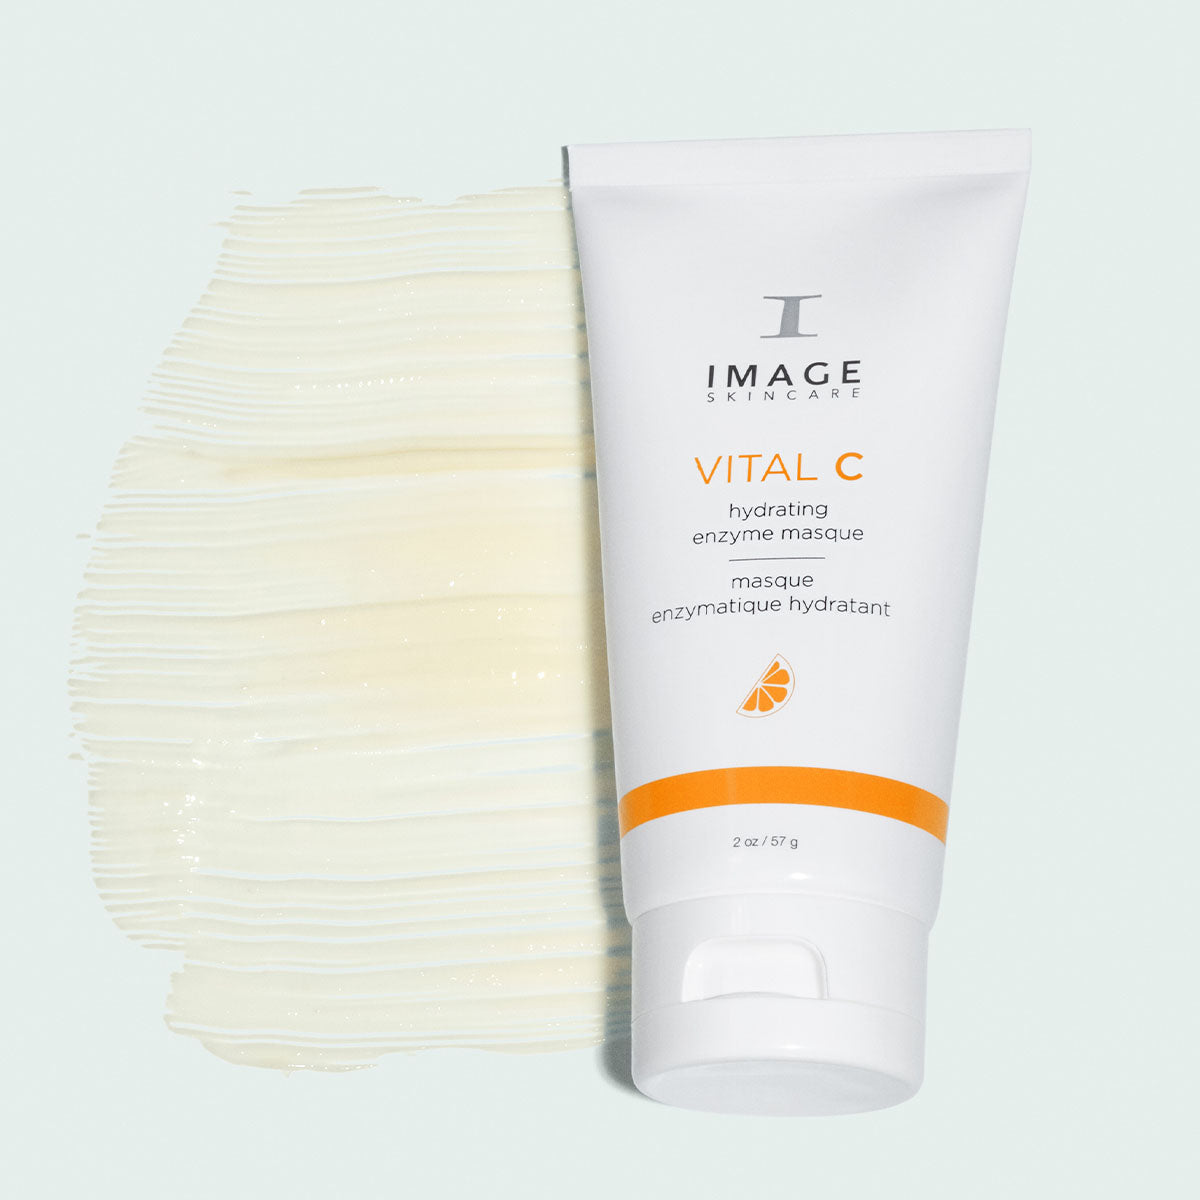 Image Skincare - Vital C- Hydrating Enzyme Masque